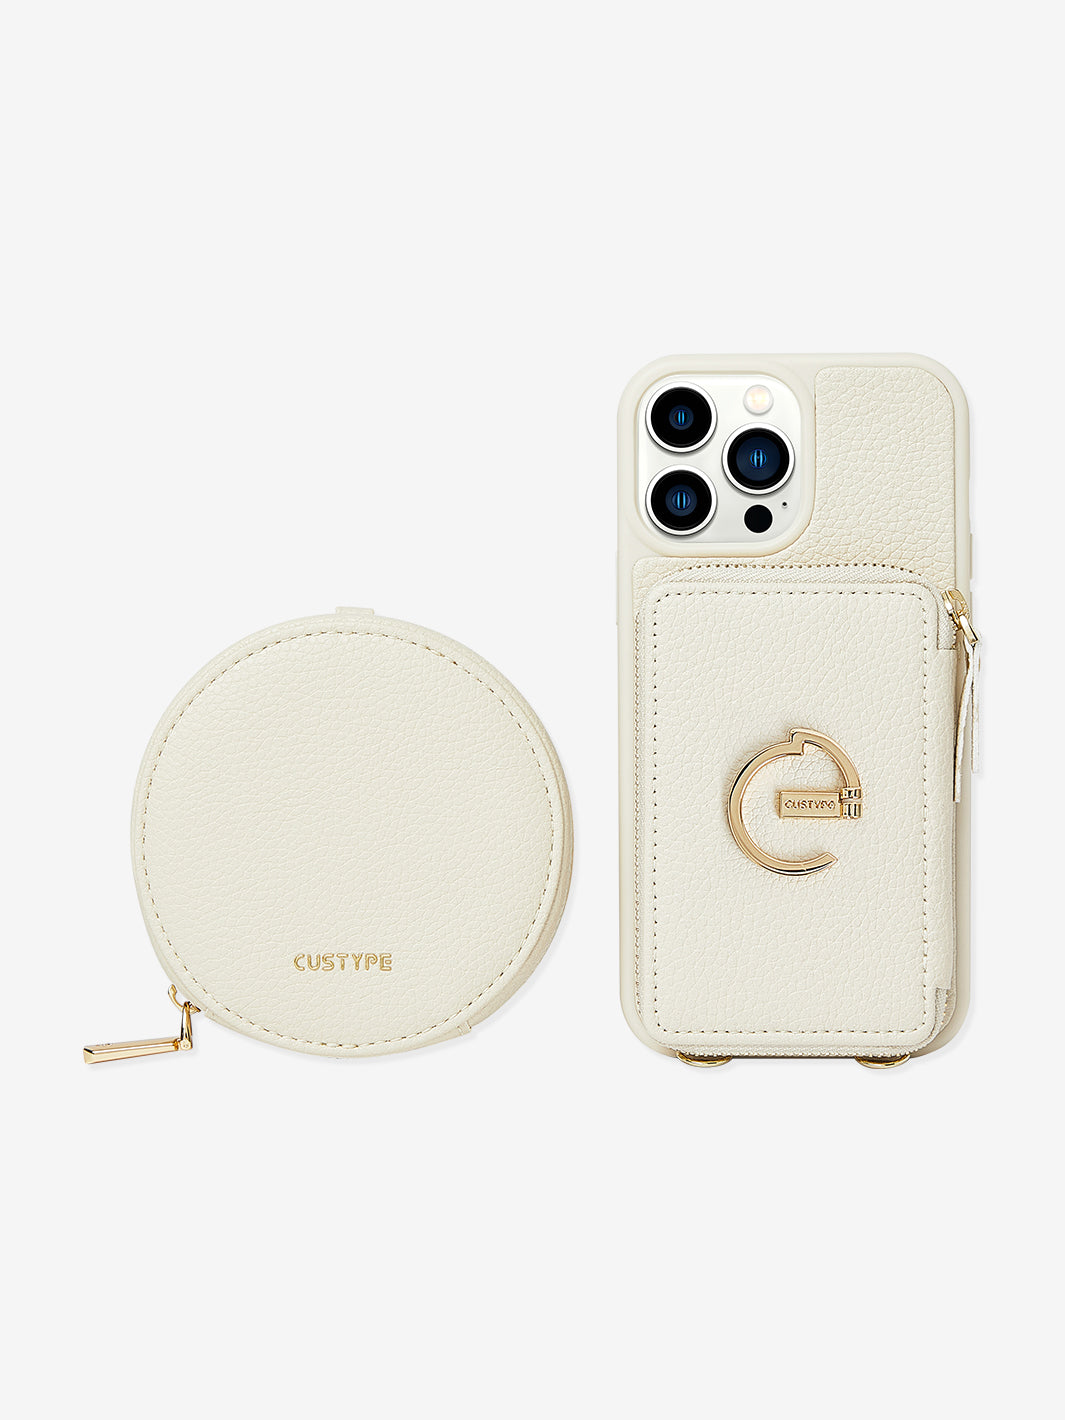 Custype Round bag E Shape iPhone crossbody case white-2